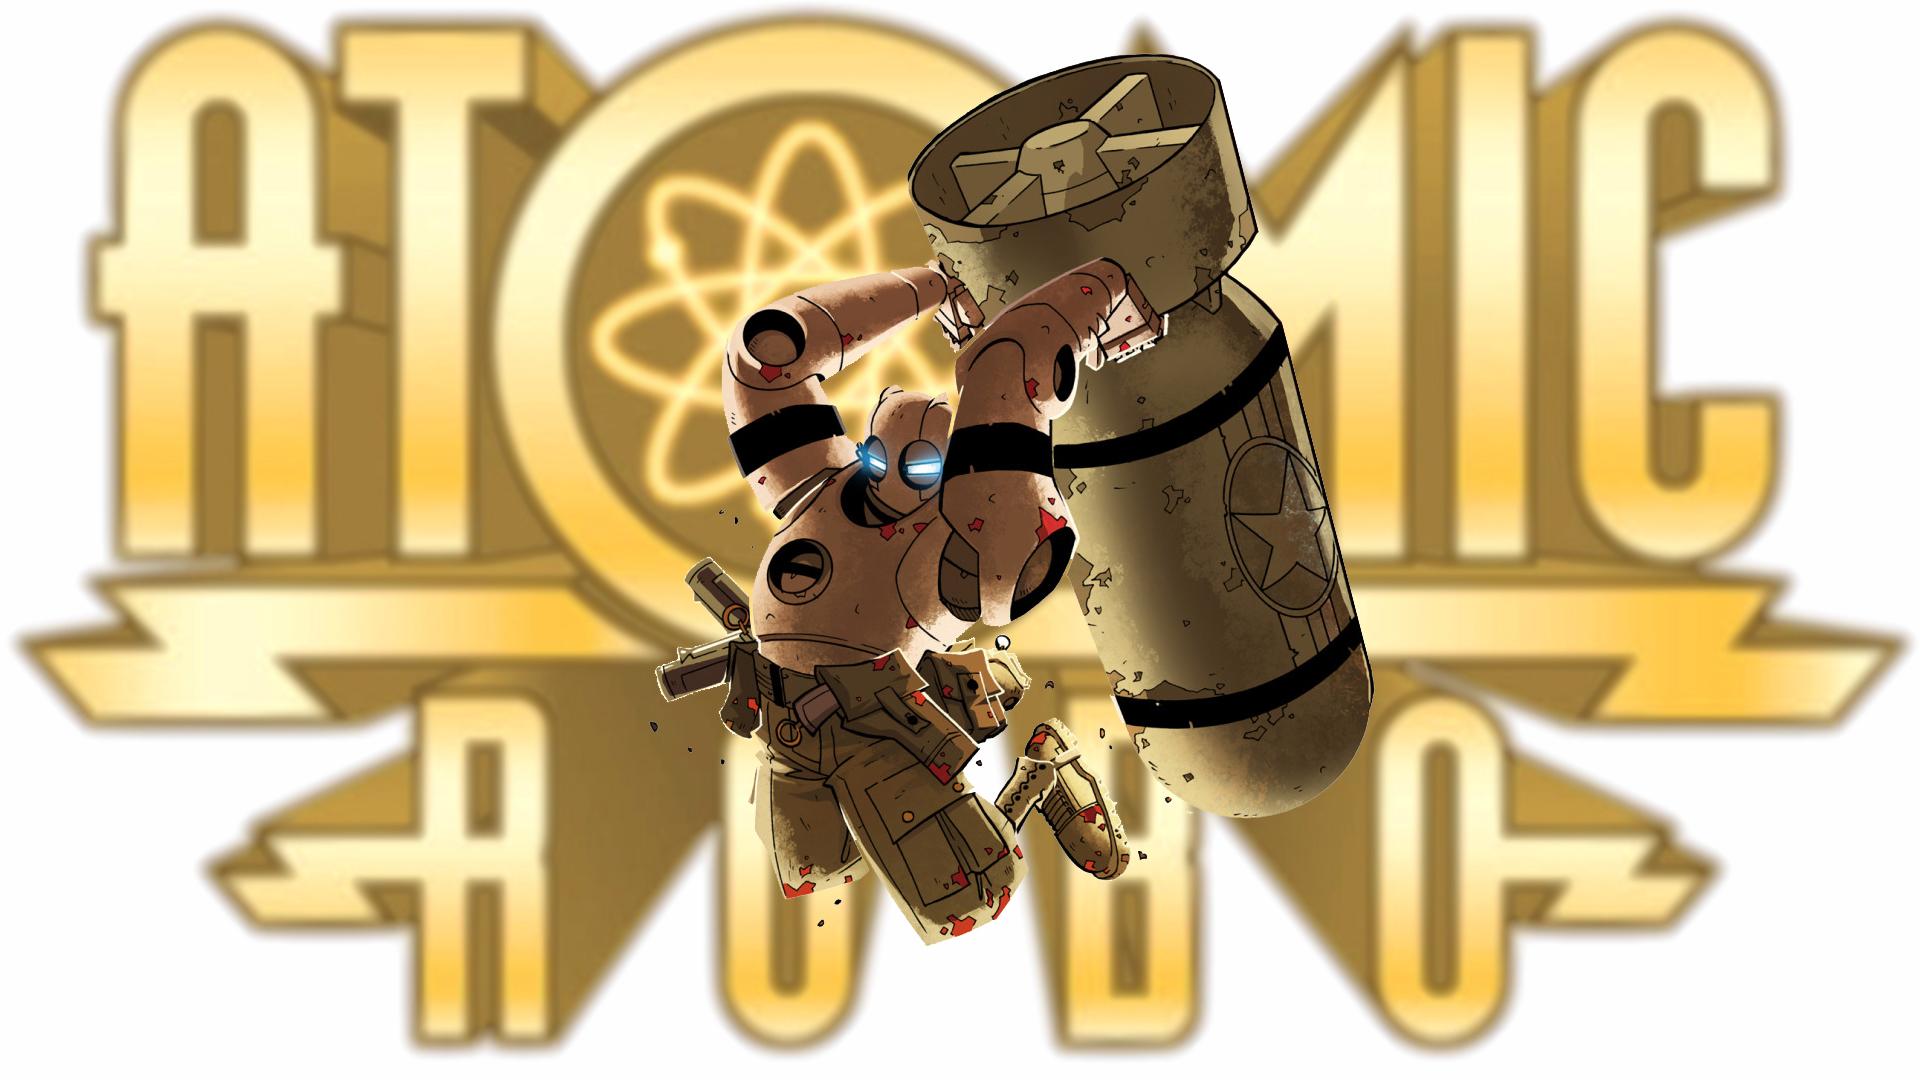 comics, atomic robo wallpaper for mobile